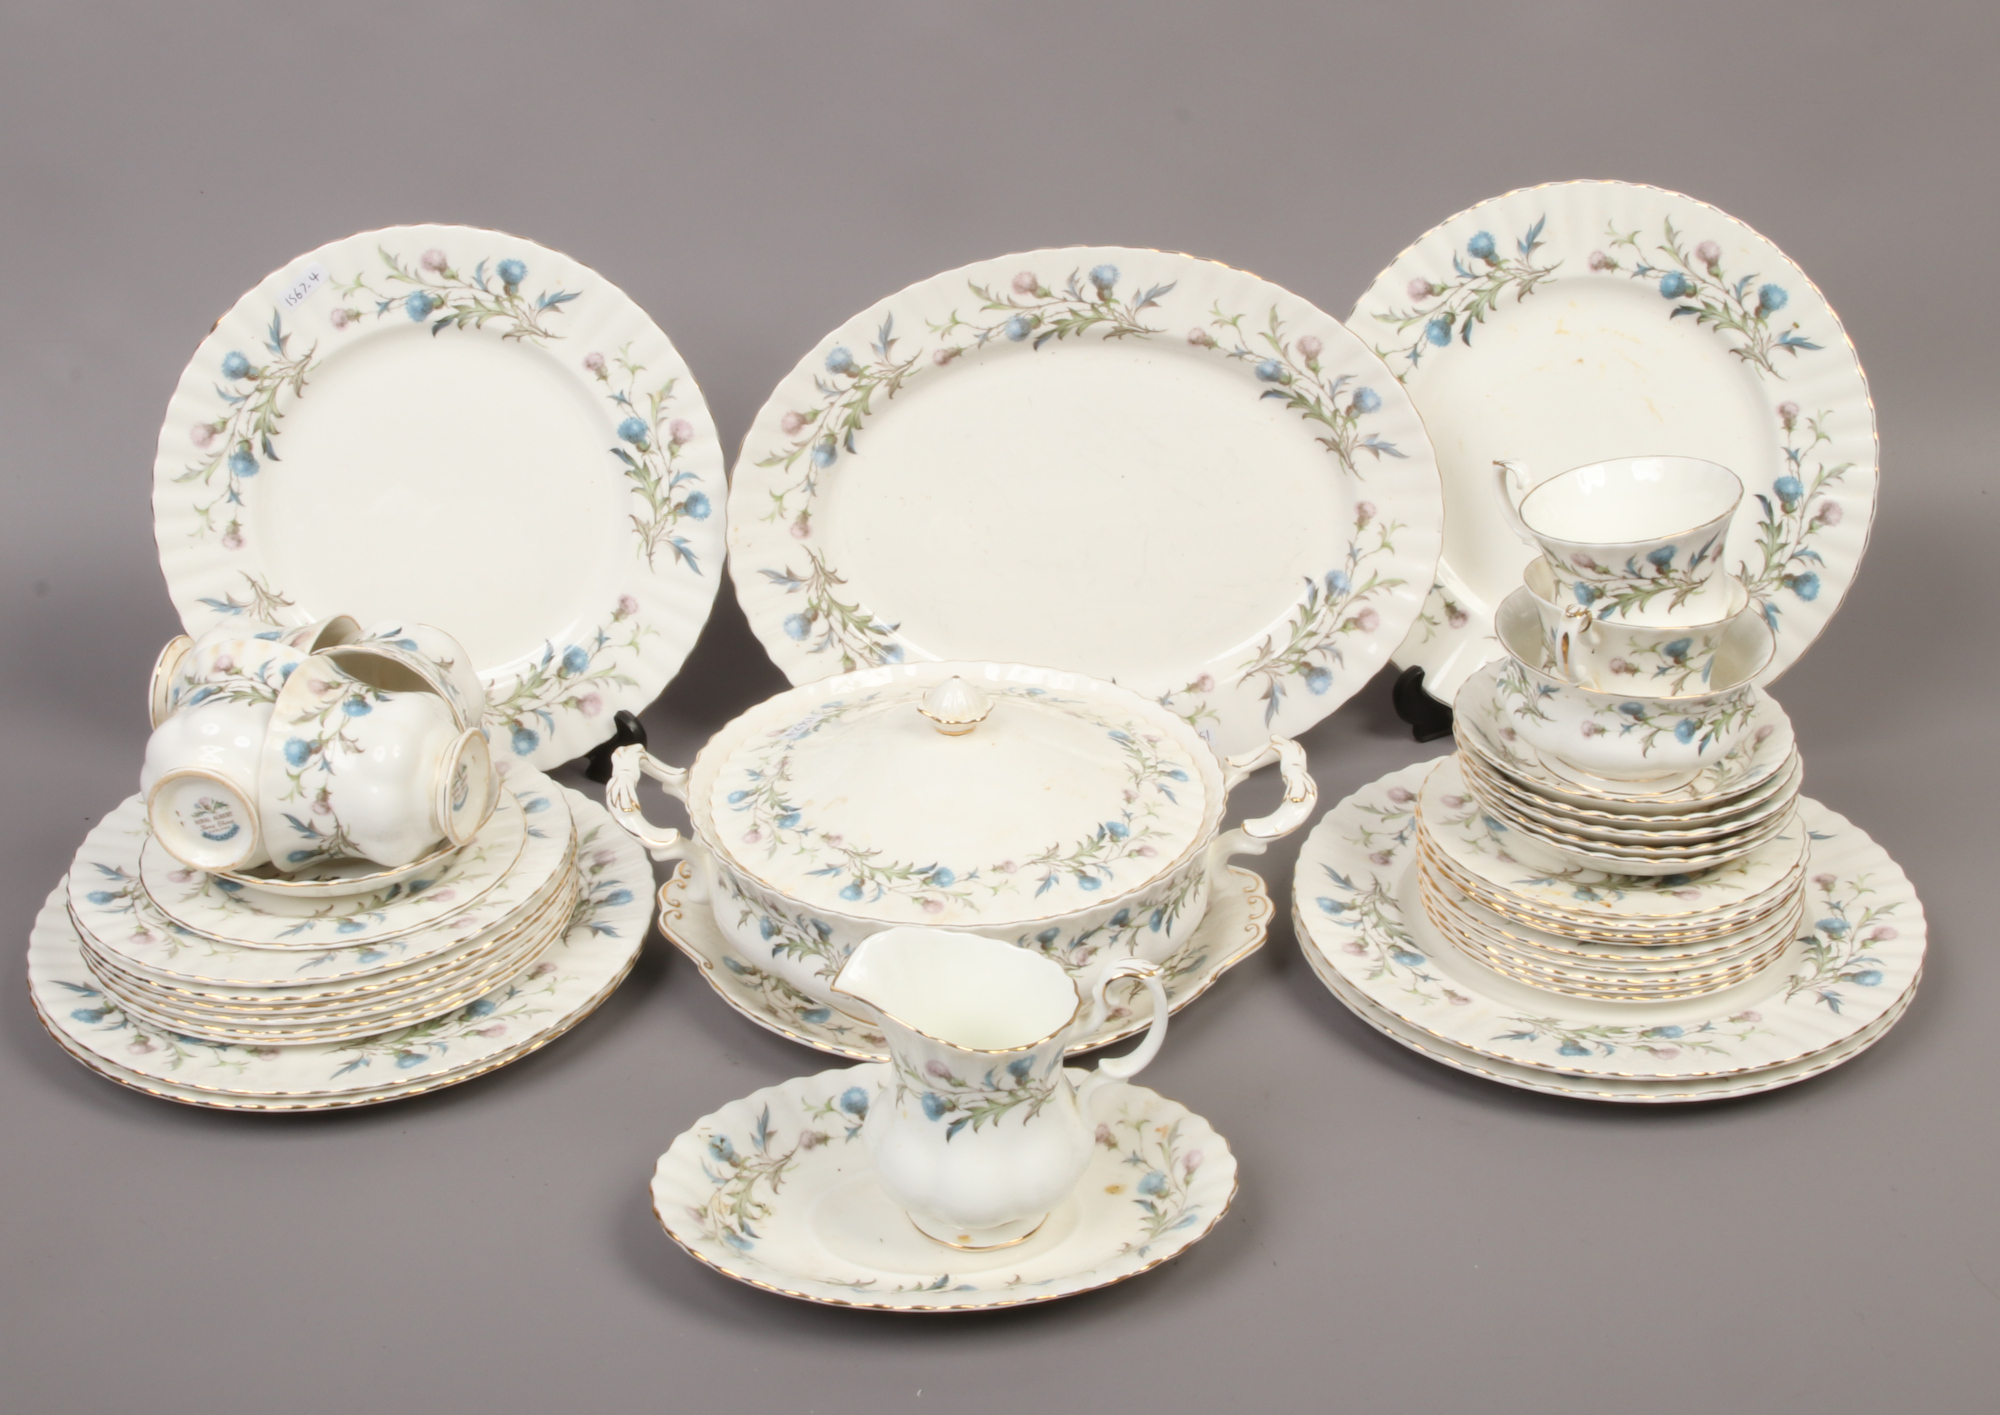 A collection of Royal Albert bone china tea / dinnerwares in The Brigadoon design.